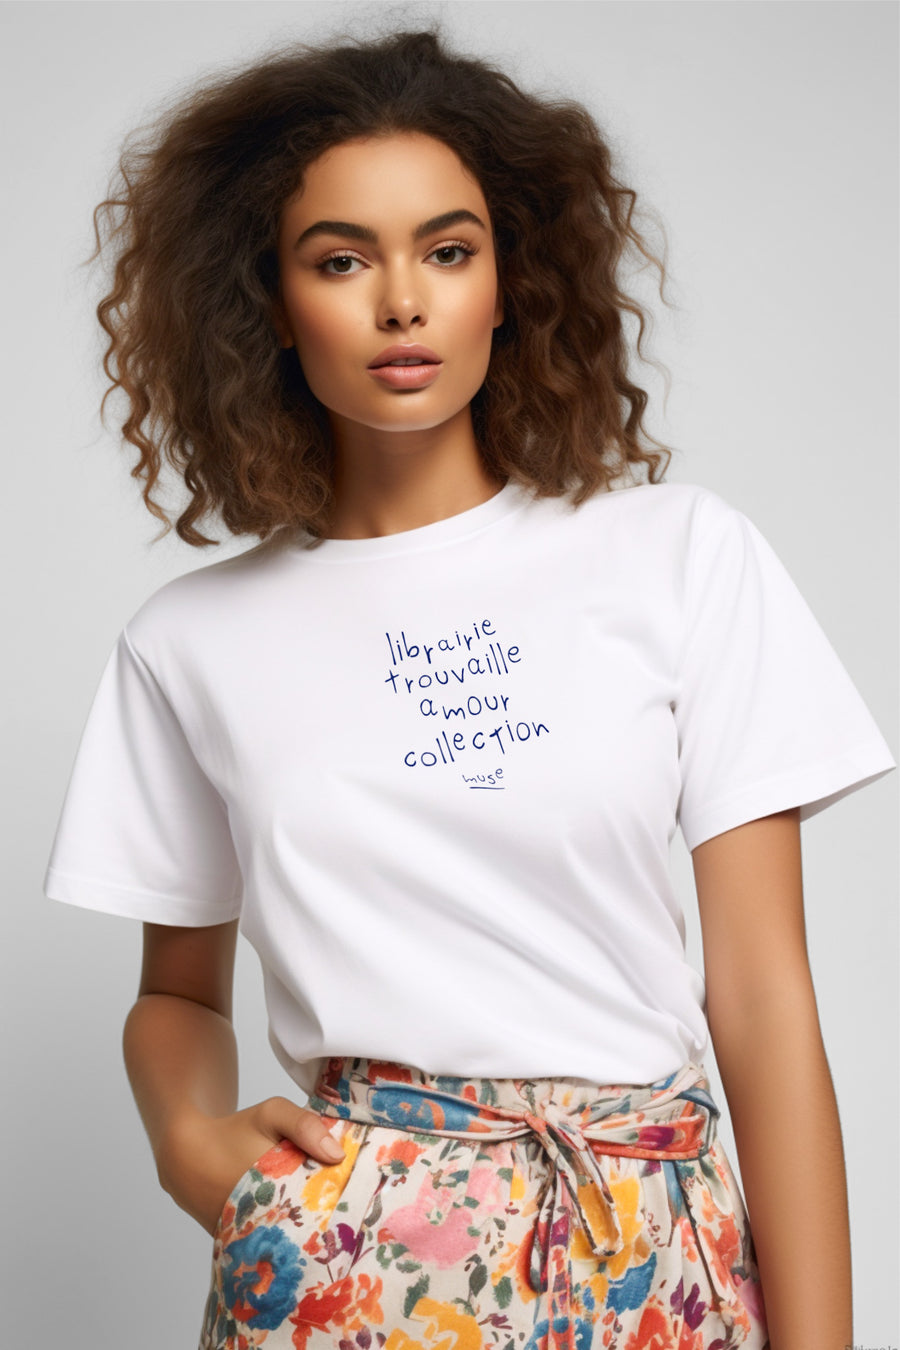 T-shirt | librairie, trouvaille, amour, collection (5 coloris)